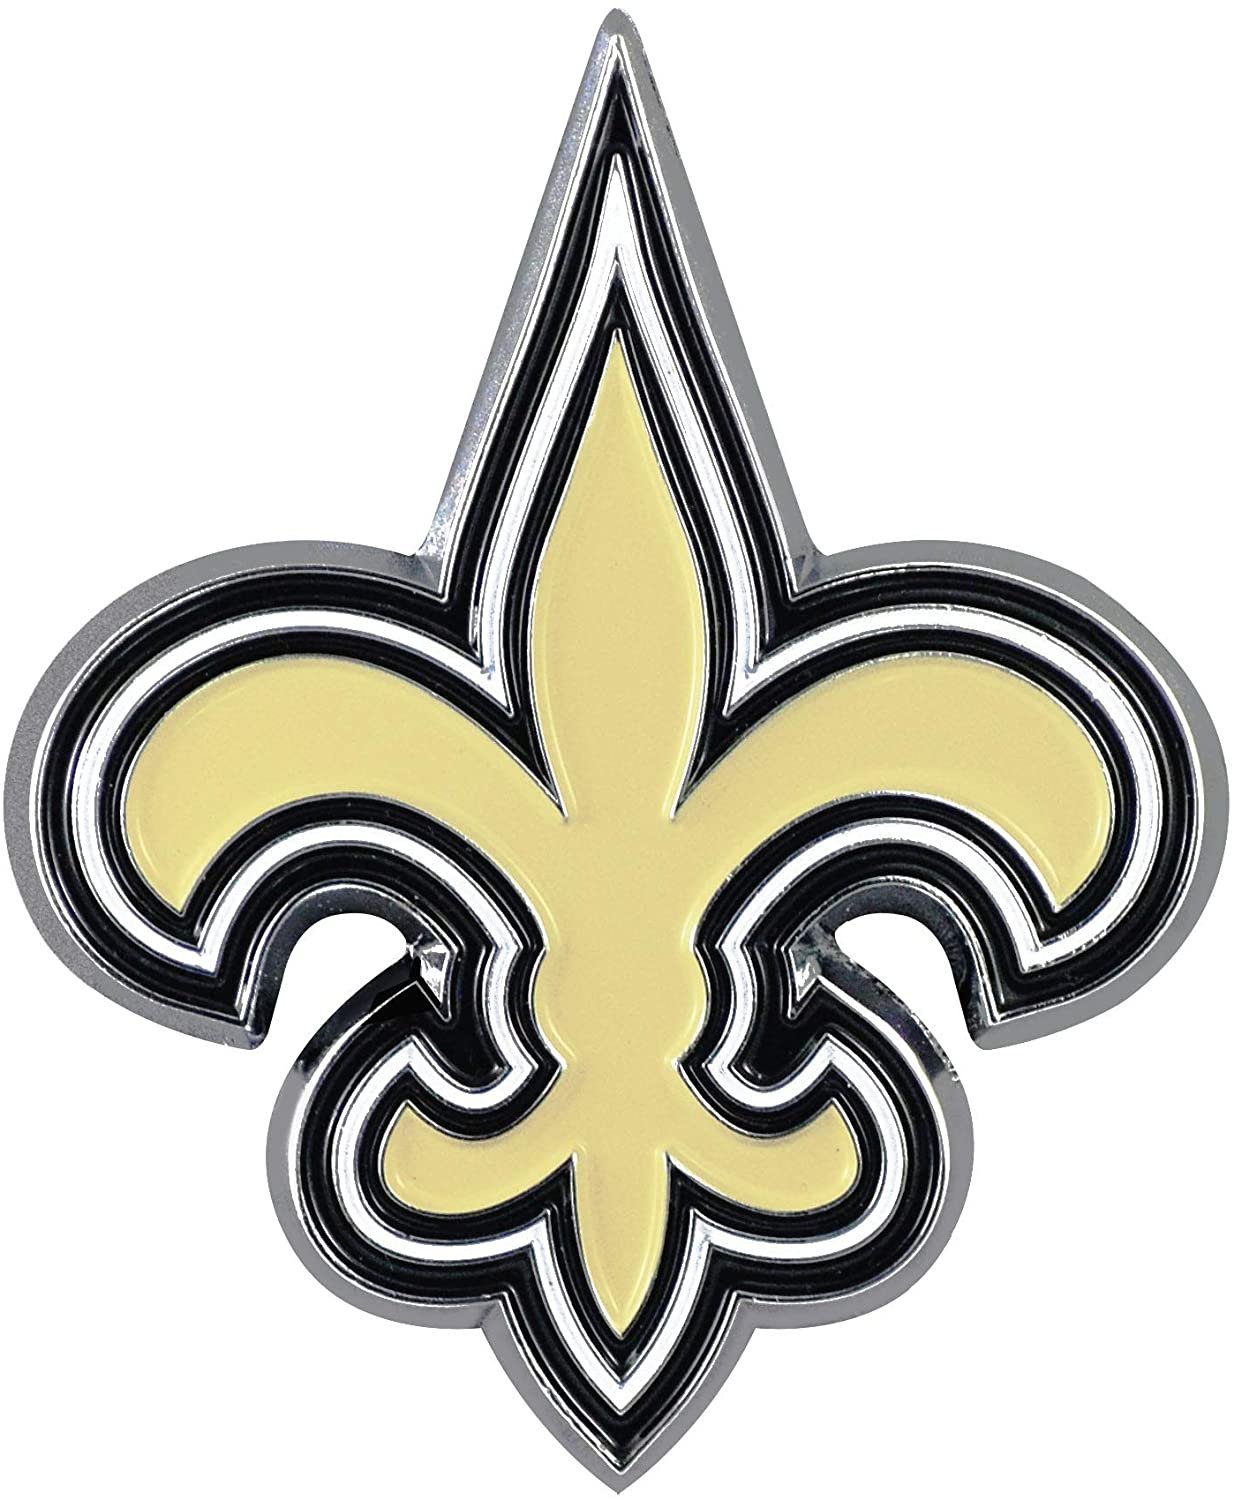 New Orleans Saints Solid Metal Color Auto Emblem, Raised Shape Cut, 3.5 Inch, Adhesive Backing